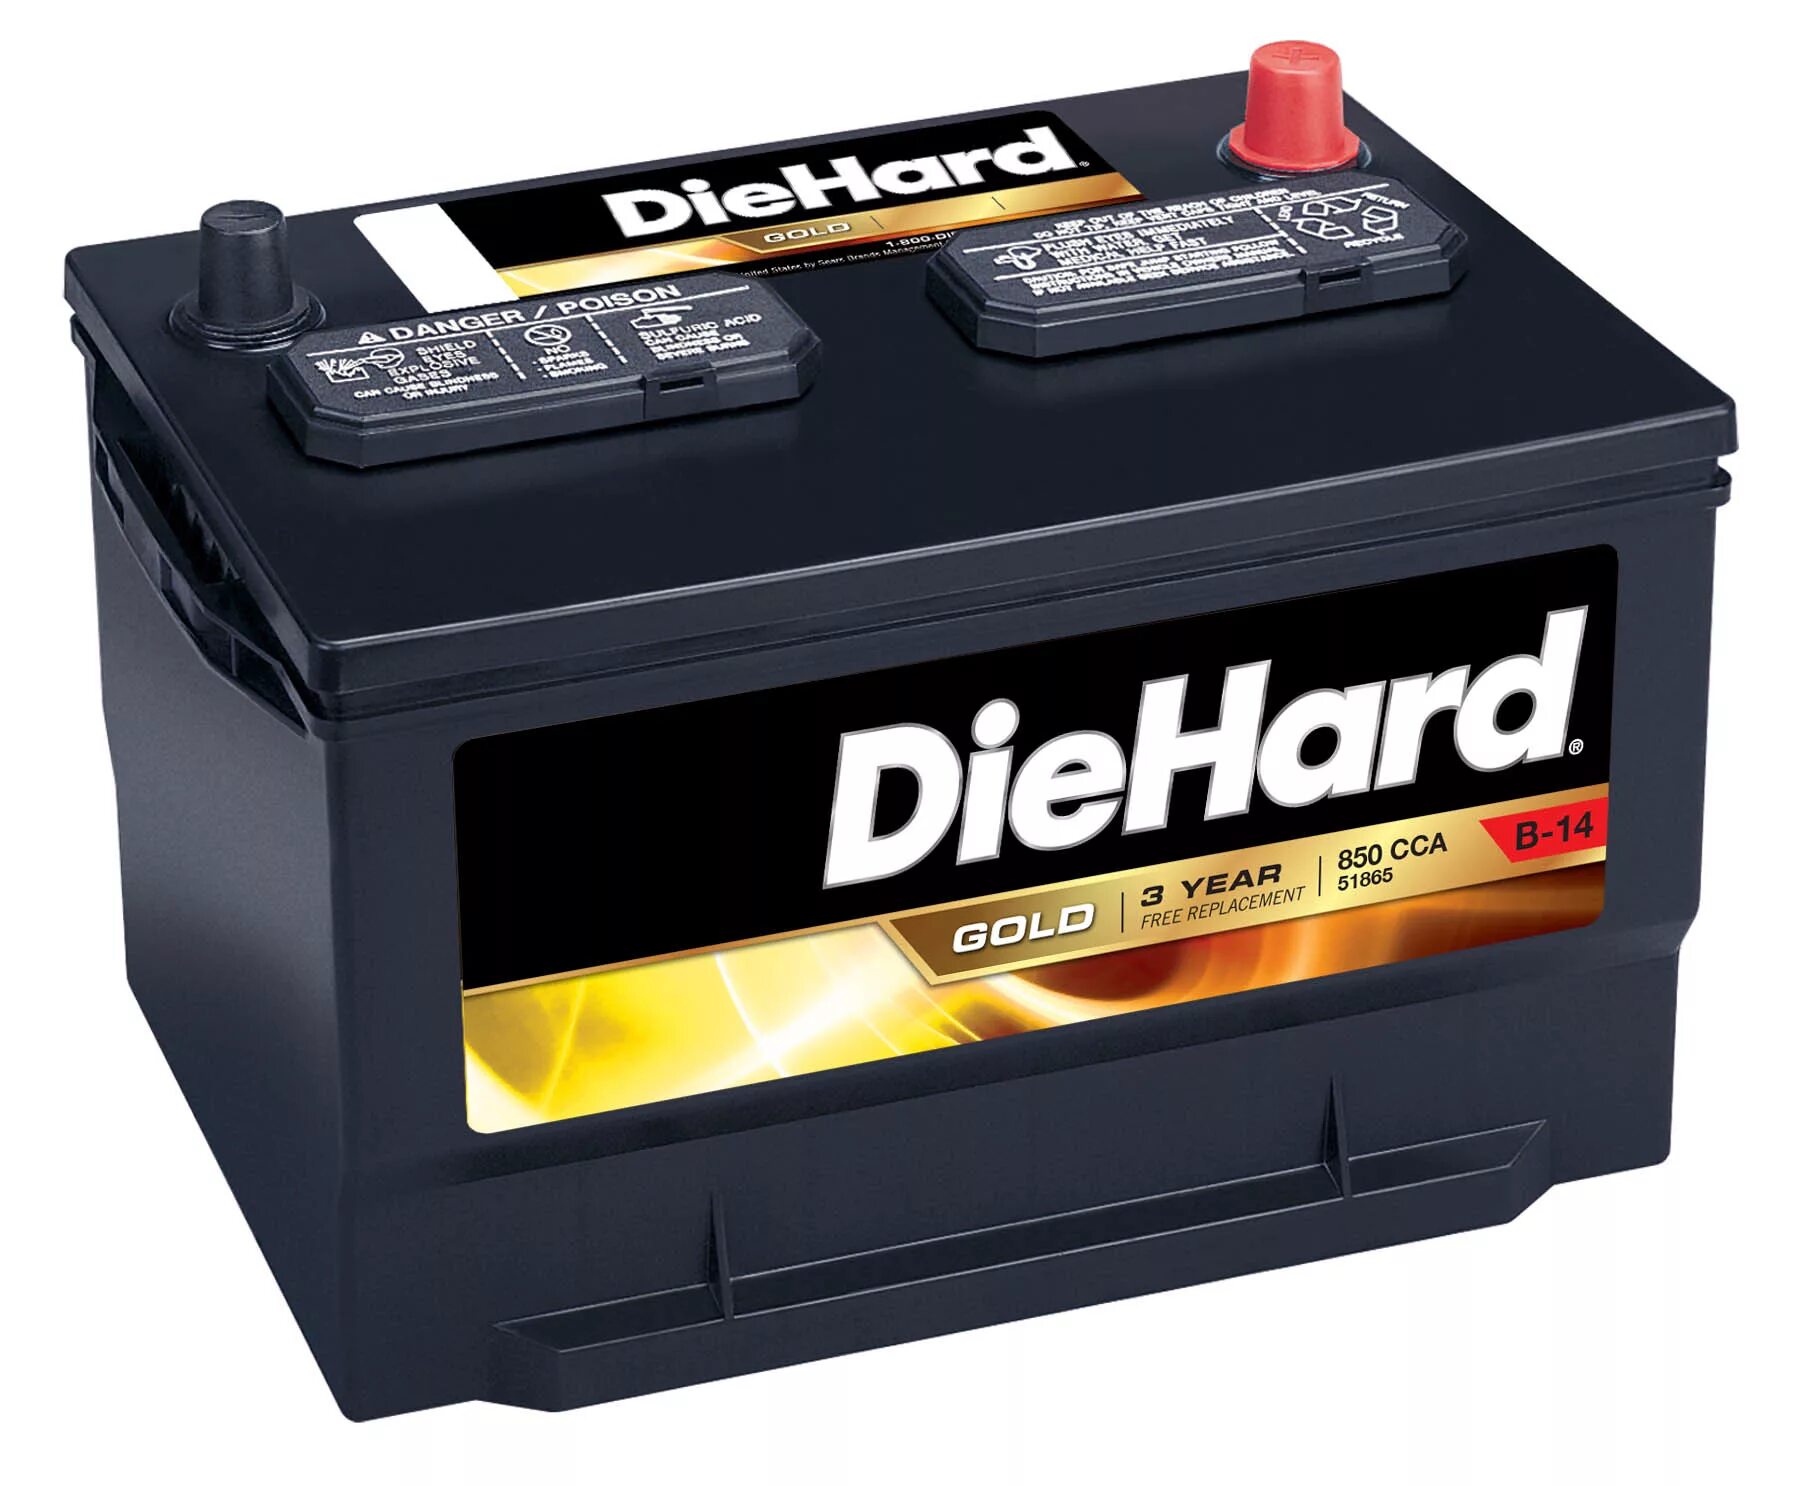 Batteries com. Diehard аккумулятор 700 cca. Car Battery. Gold Battery. Аккумулятор diehard на автомобиль Silver.